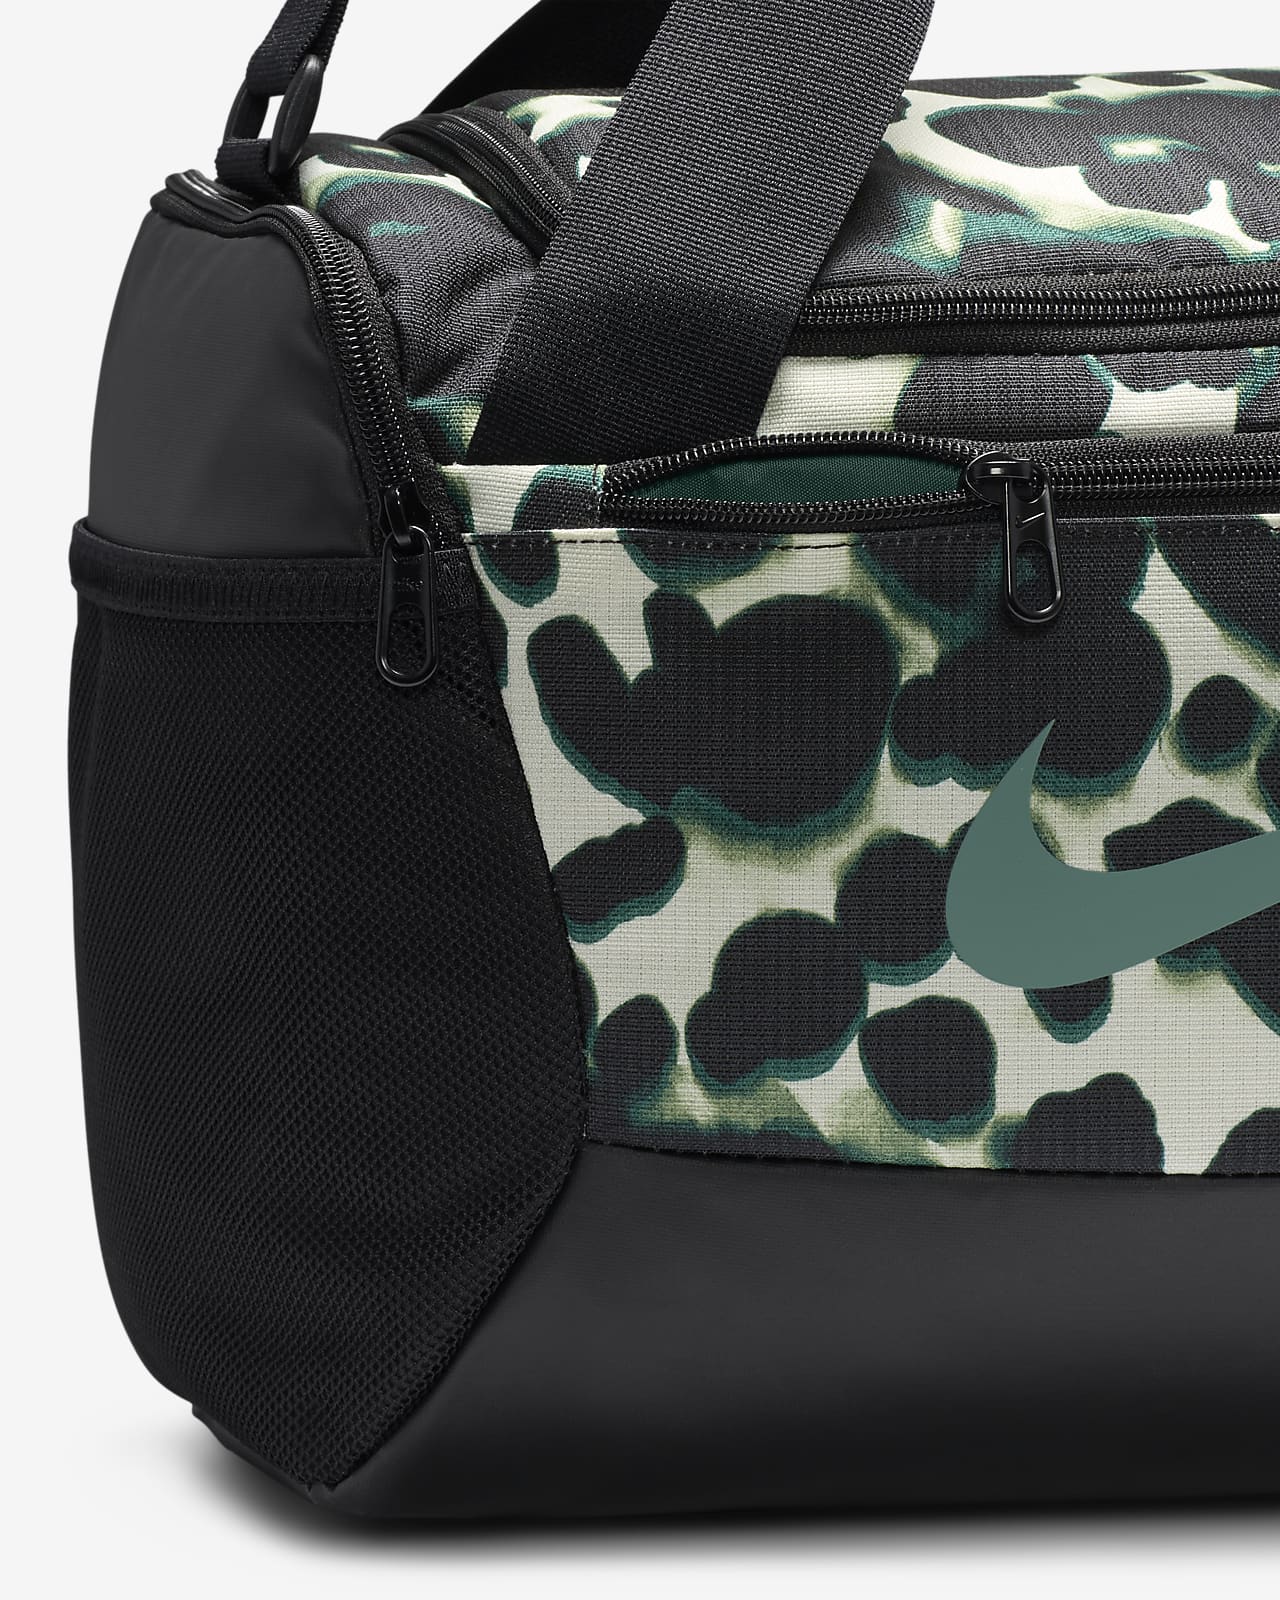 Nike Golf Brasilia Training Duffle Bag (60L) - Wholesale T-Shirts, Blank  Apparel and Accessories